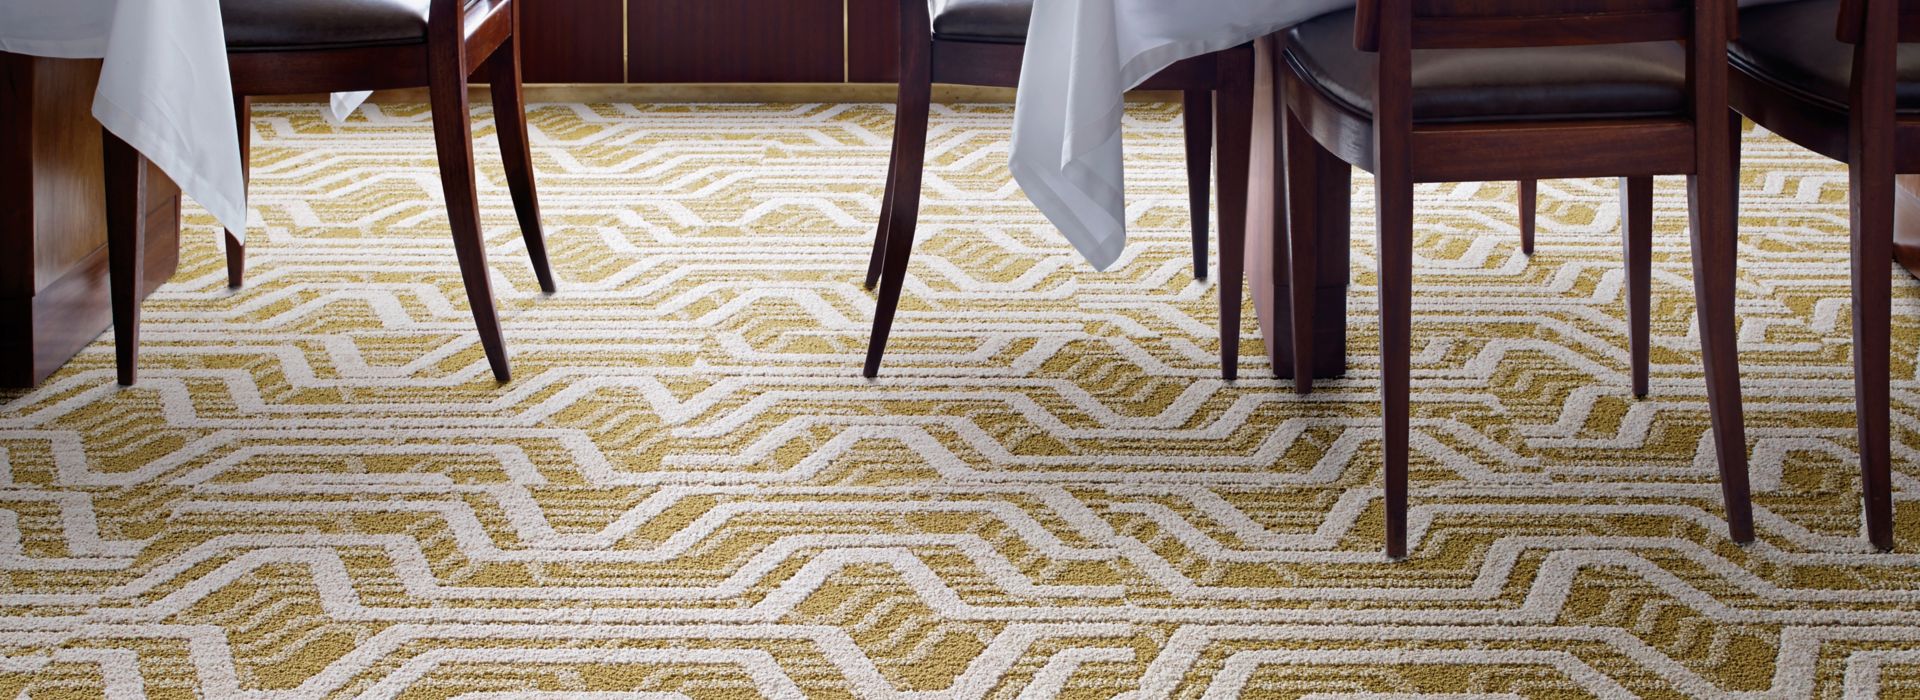 Interface PM01 and PM19 plank carpet tile in upscale dining area número de imagen 1